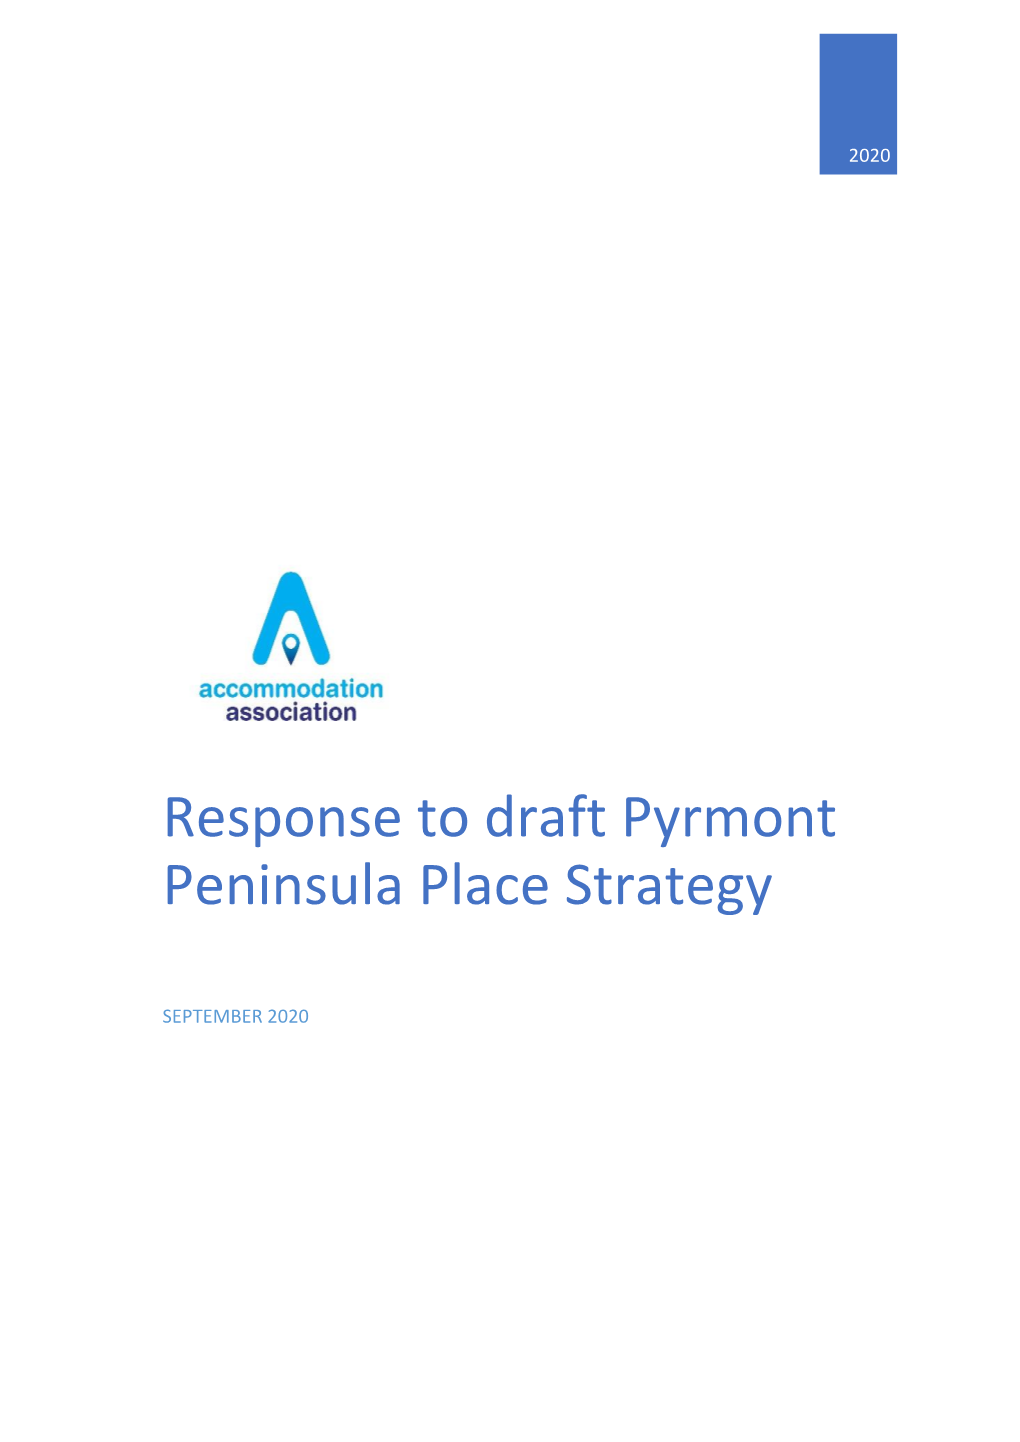 Response to Draft Pyrmont Peninsula Place Strategy